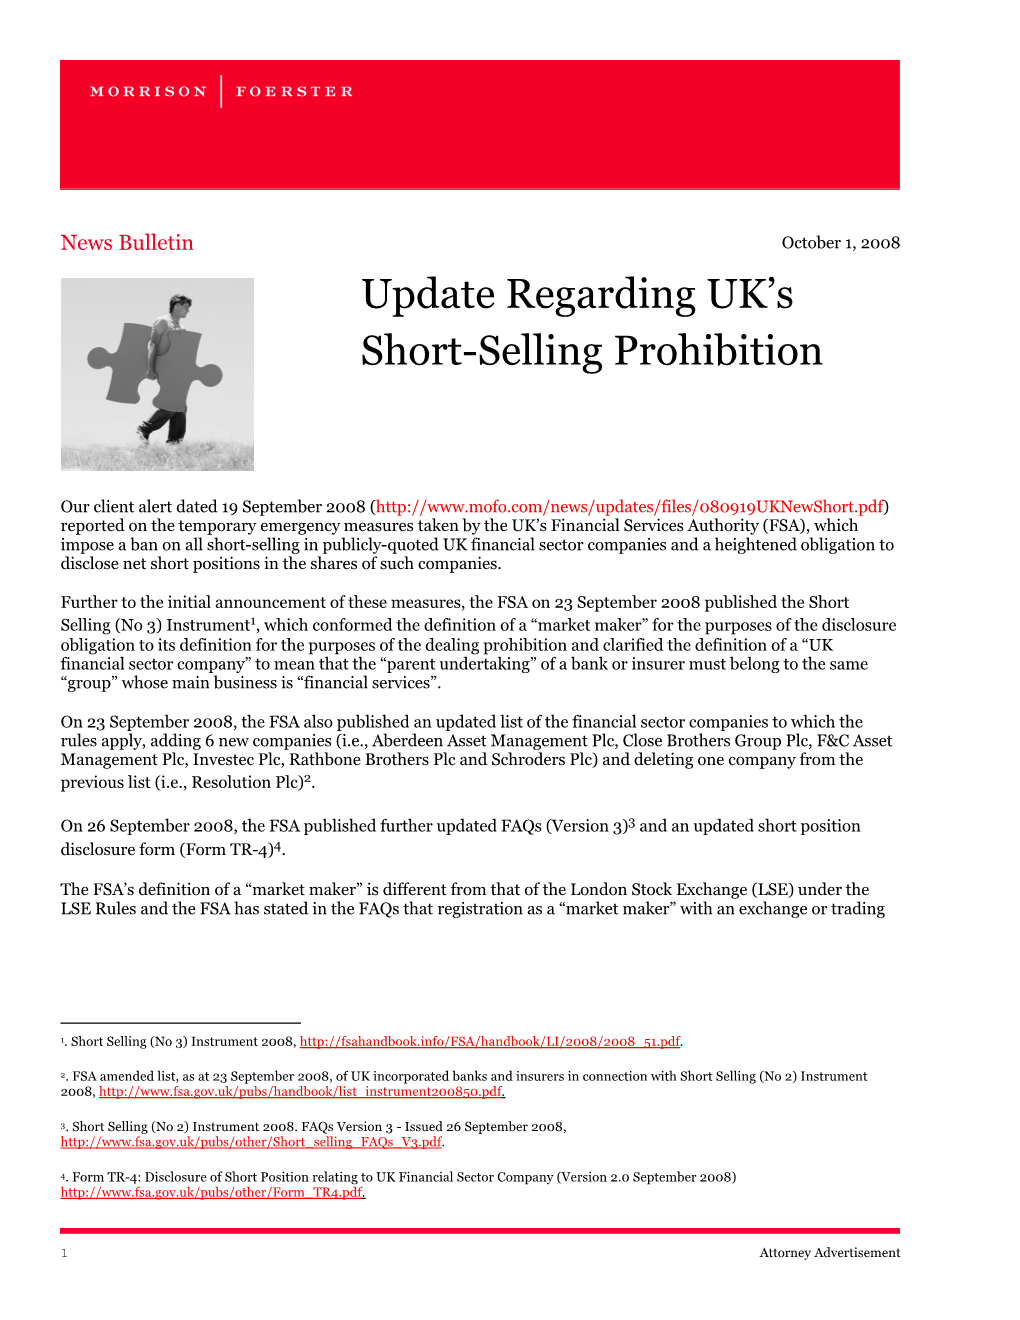 Update Regarding UK's Short-Selling Prohibition